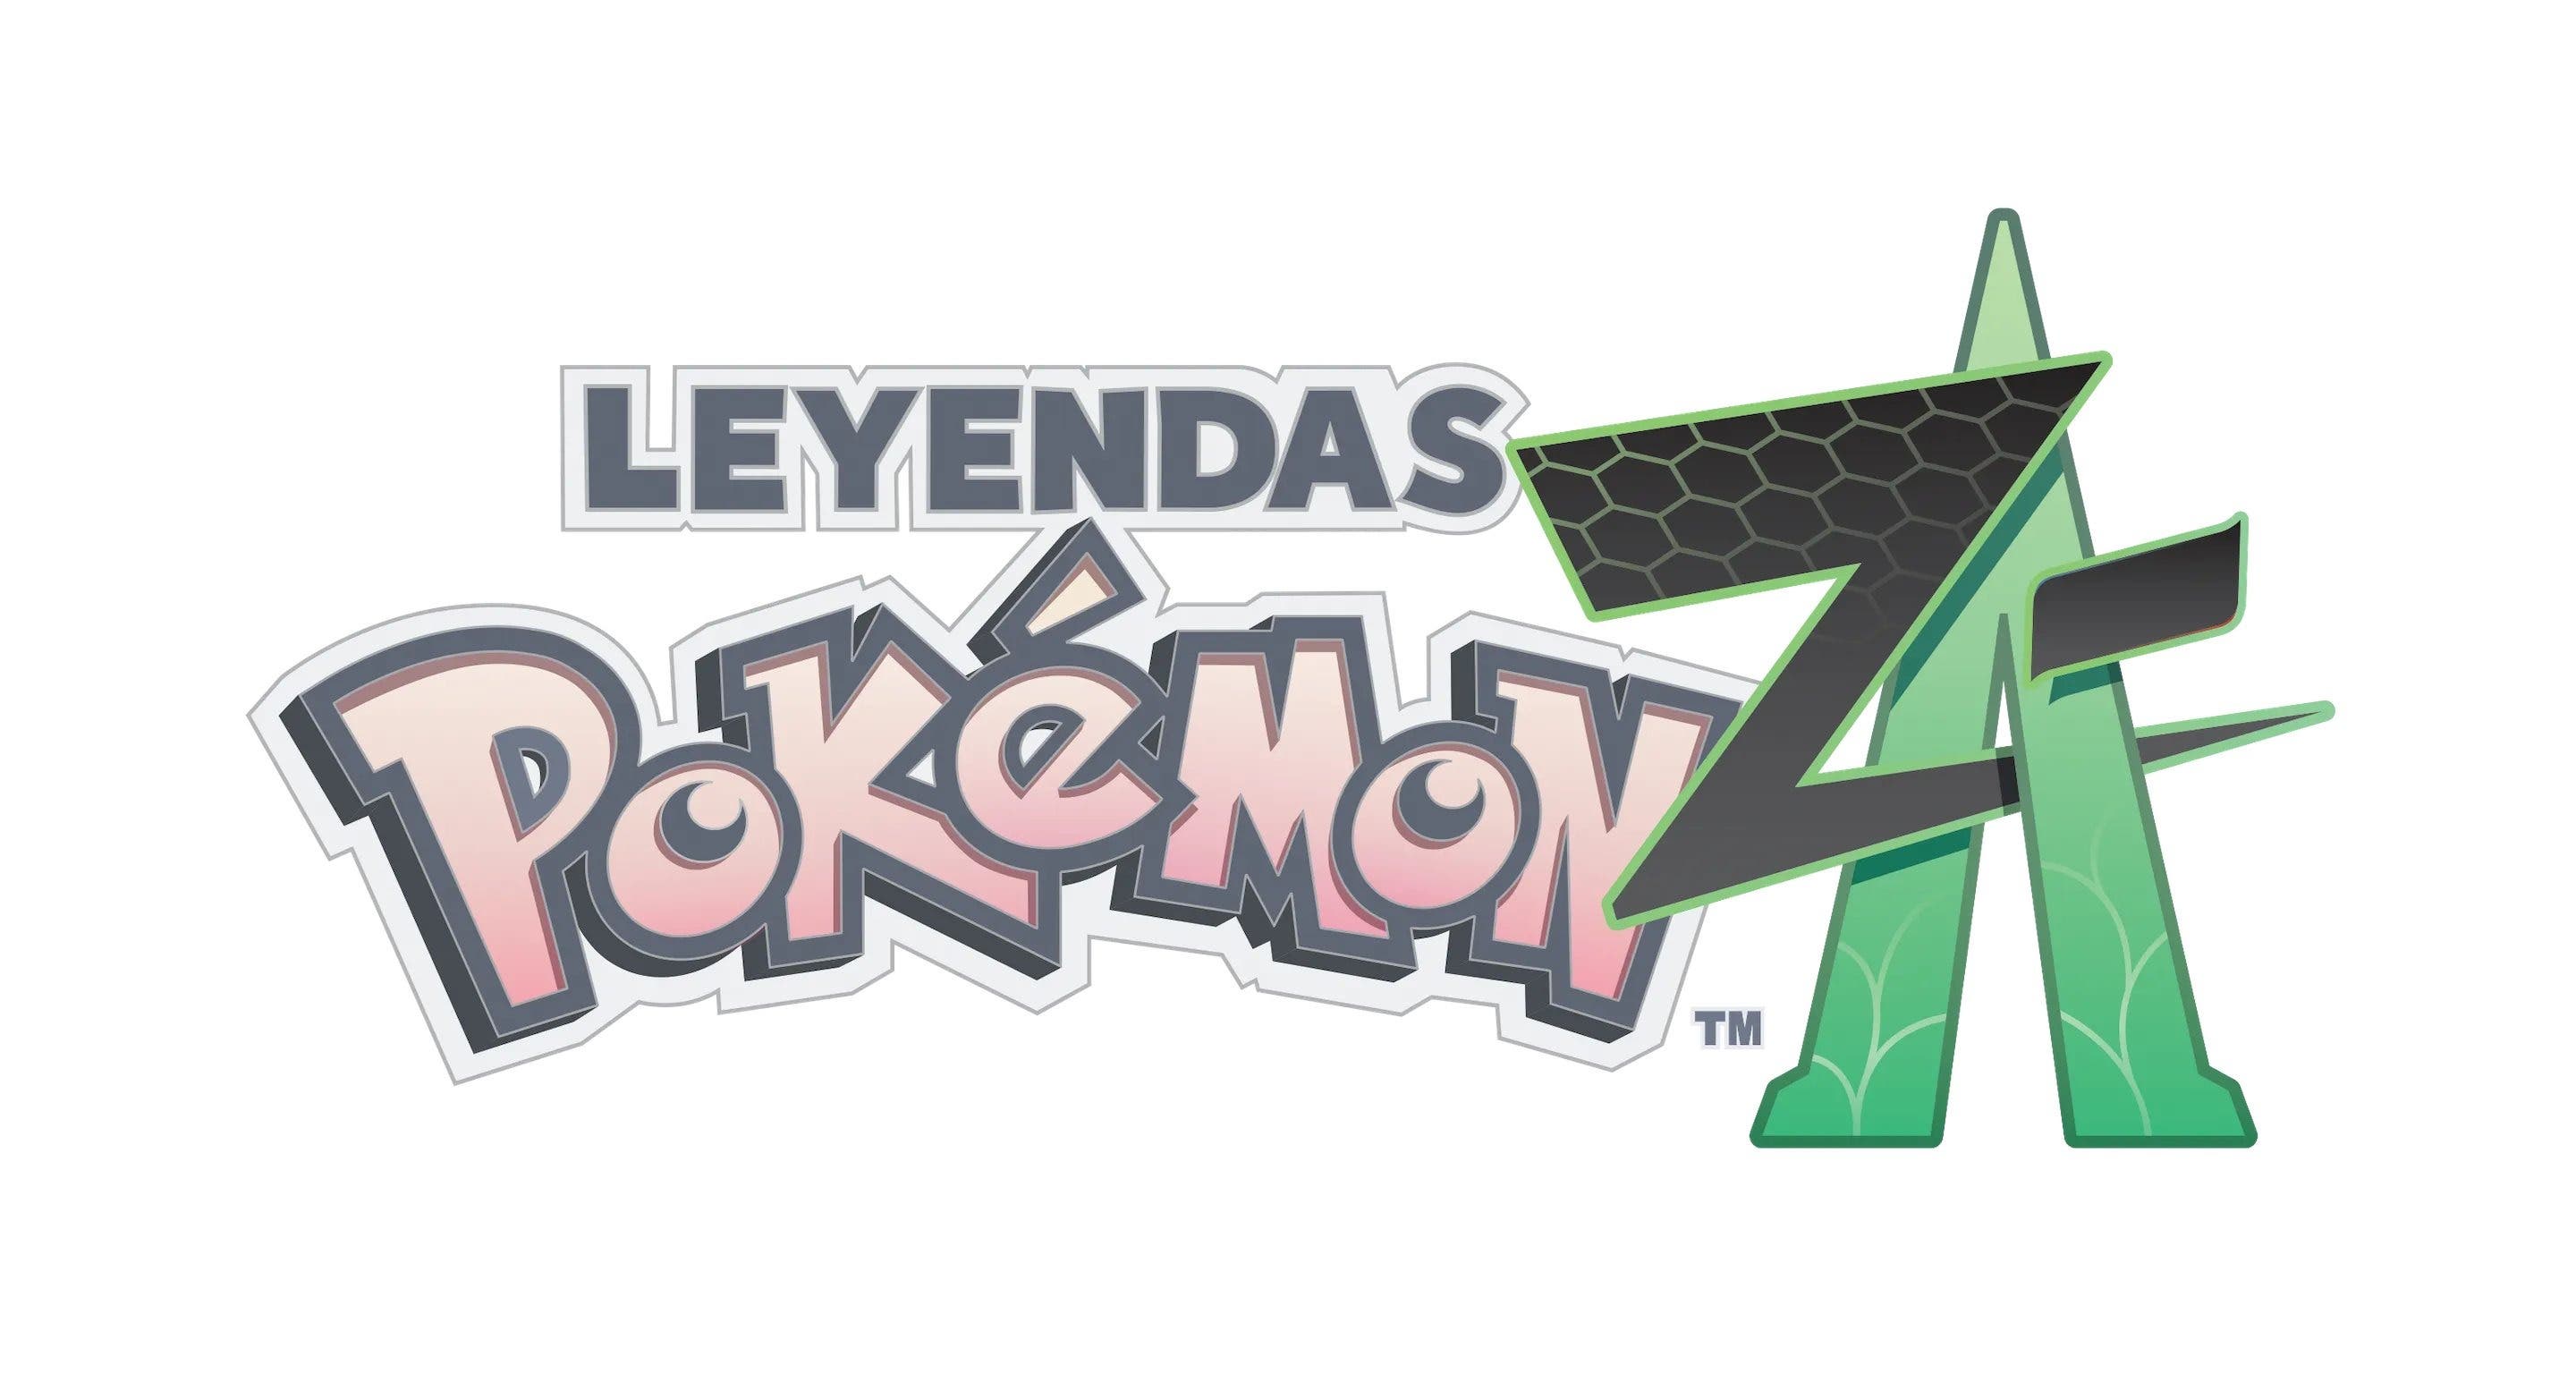 El logo de Leyendas Pokémon: Z-A oculta esta referencia